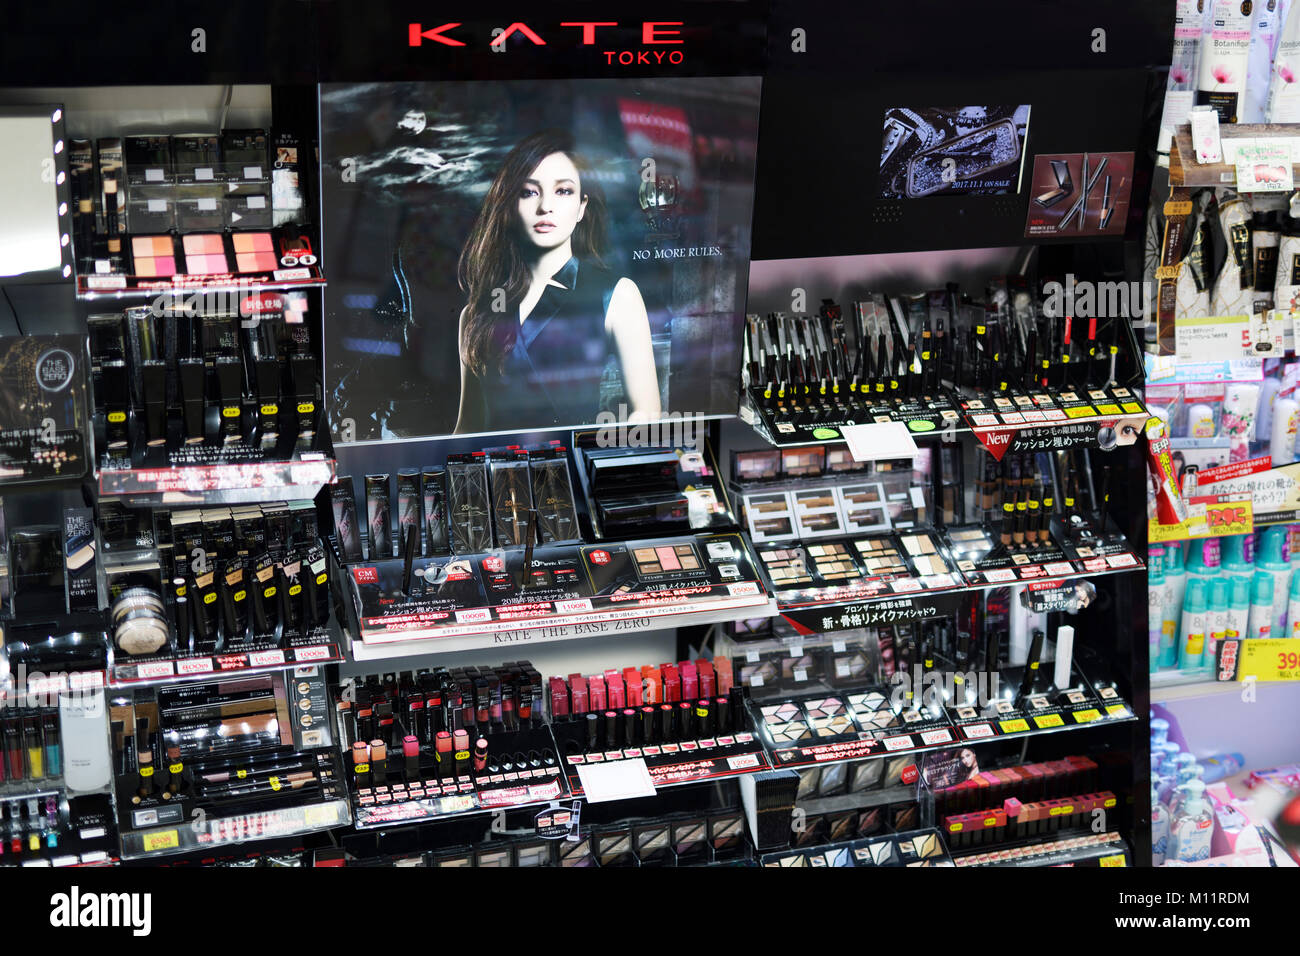 KATE Tokyo, Japanese makeup brand, cosmetics store display in Kyoto, Japan 2017 Stock Photo